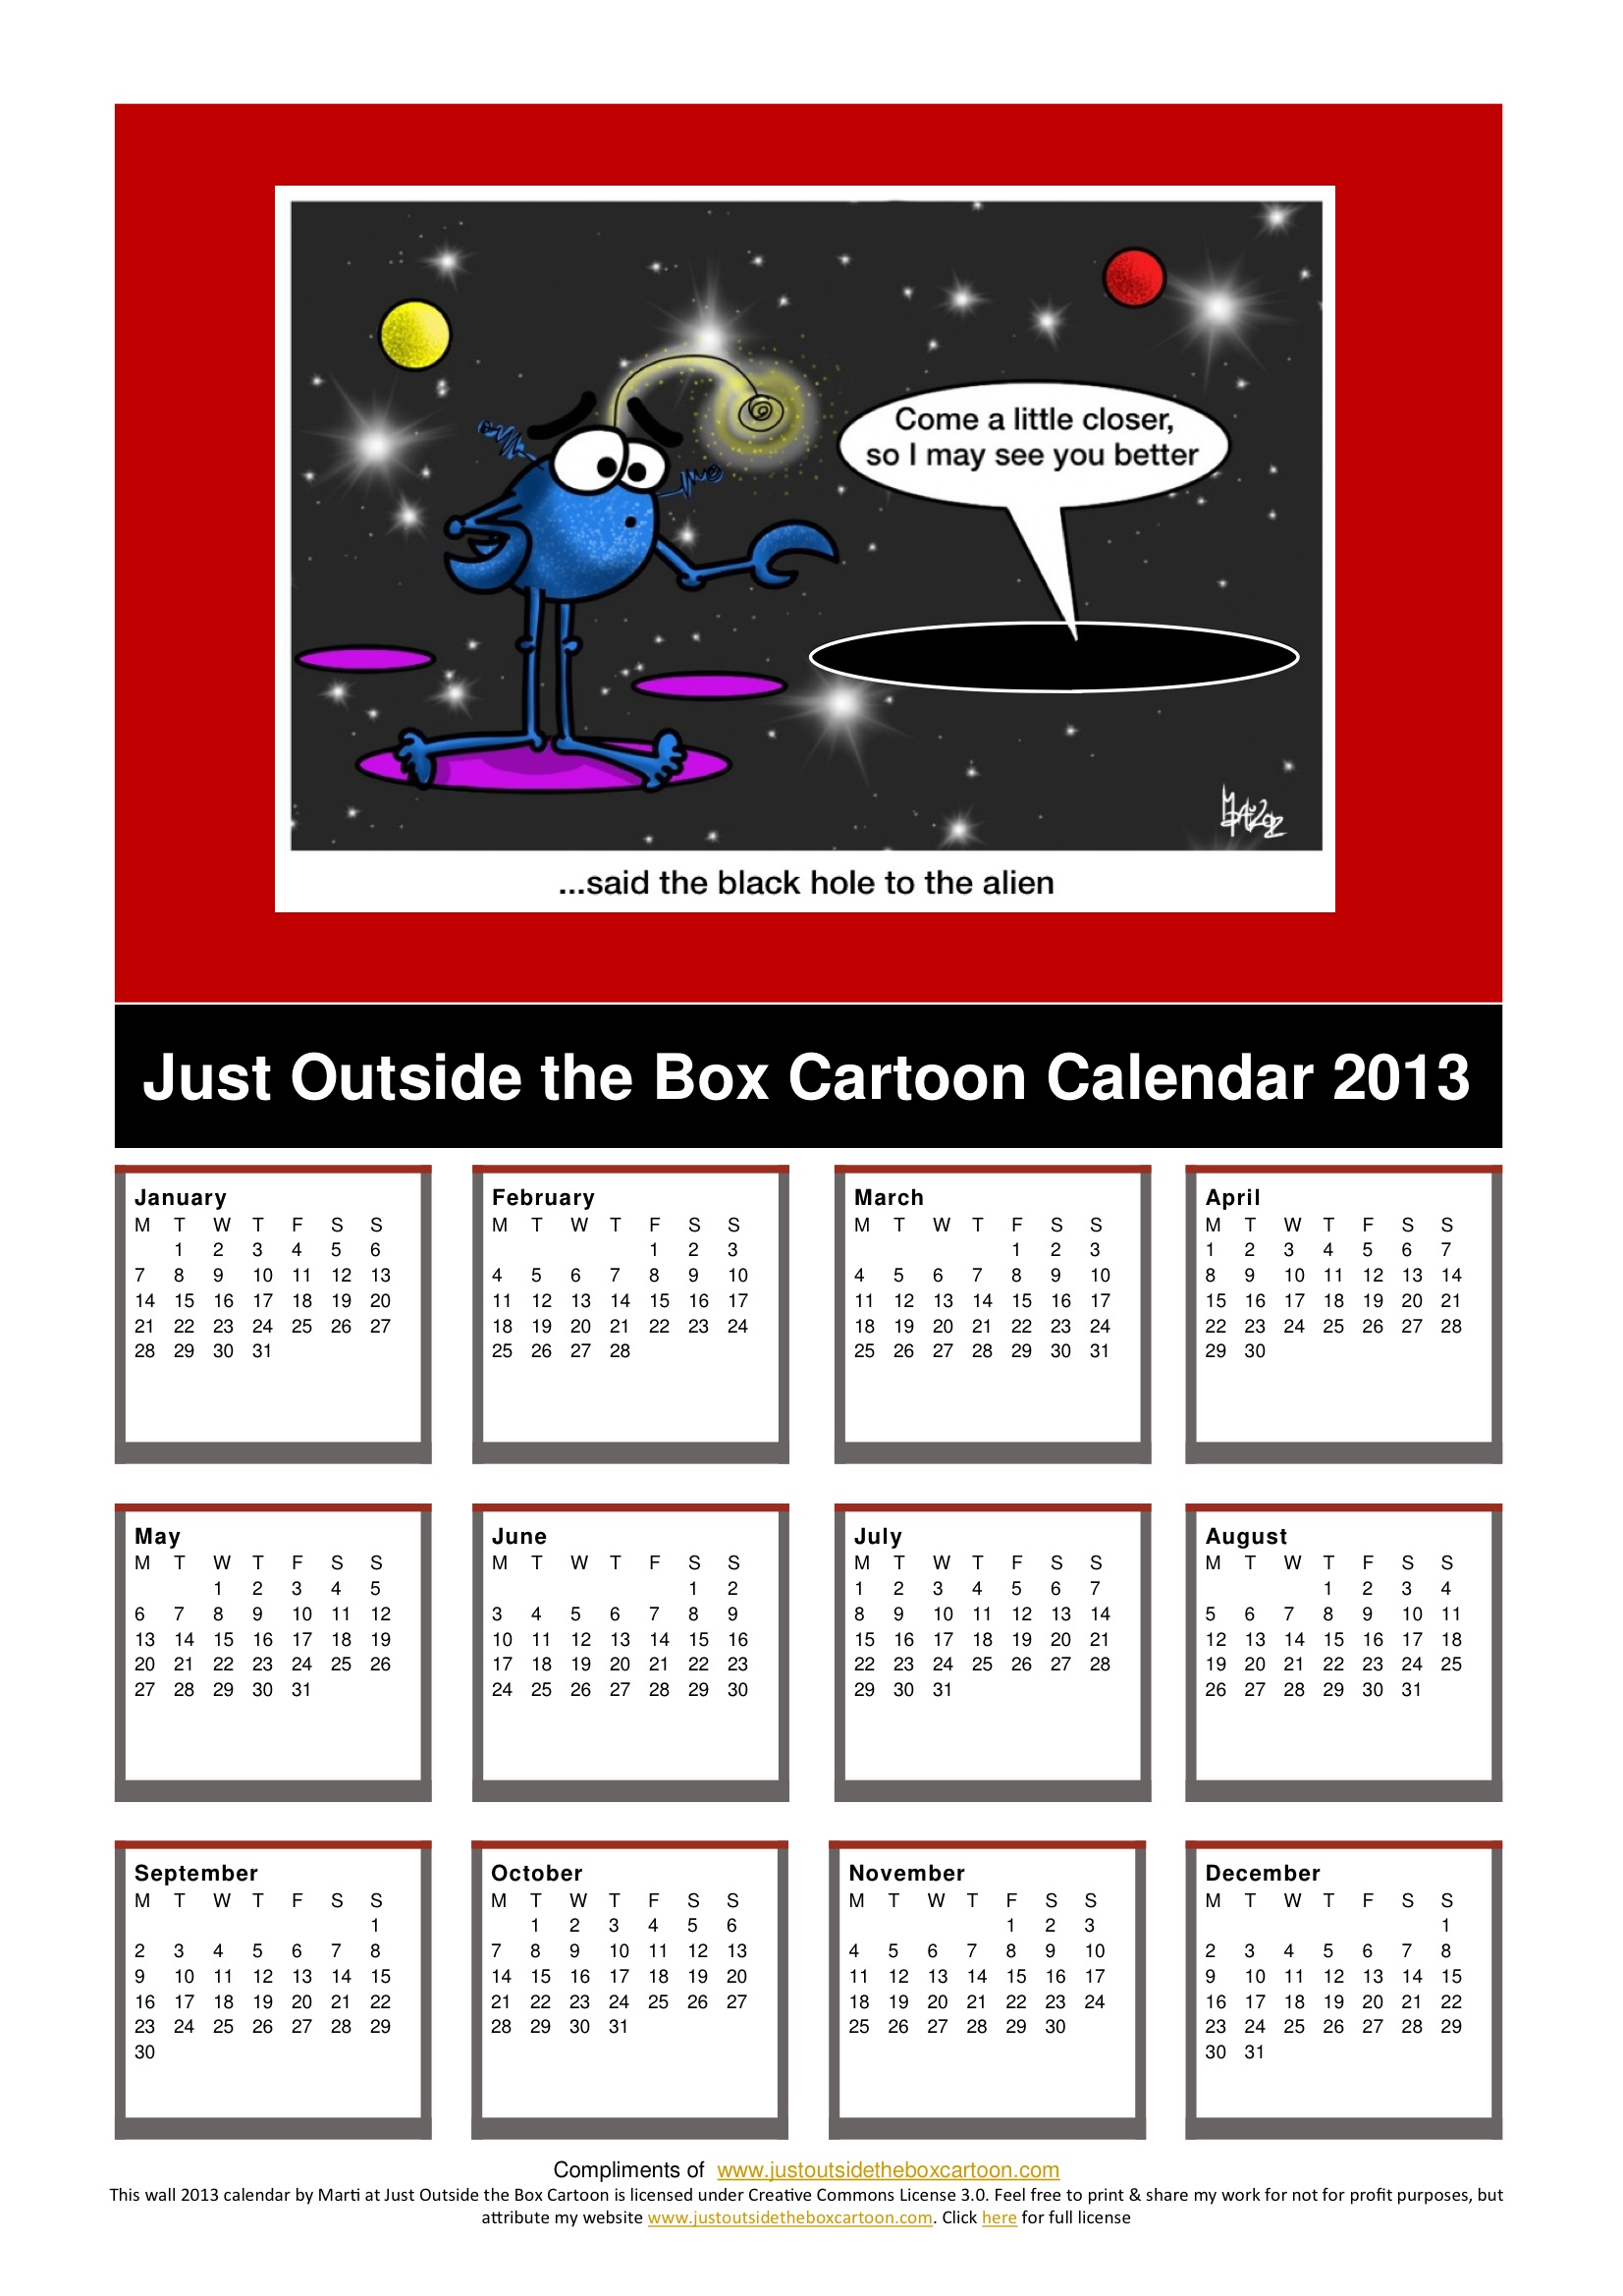 Just outside the Box Cartoon Calendar 2013